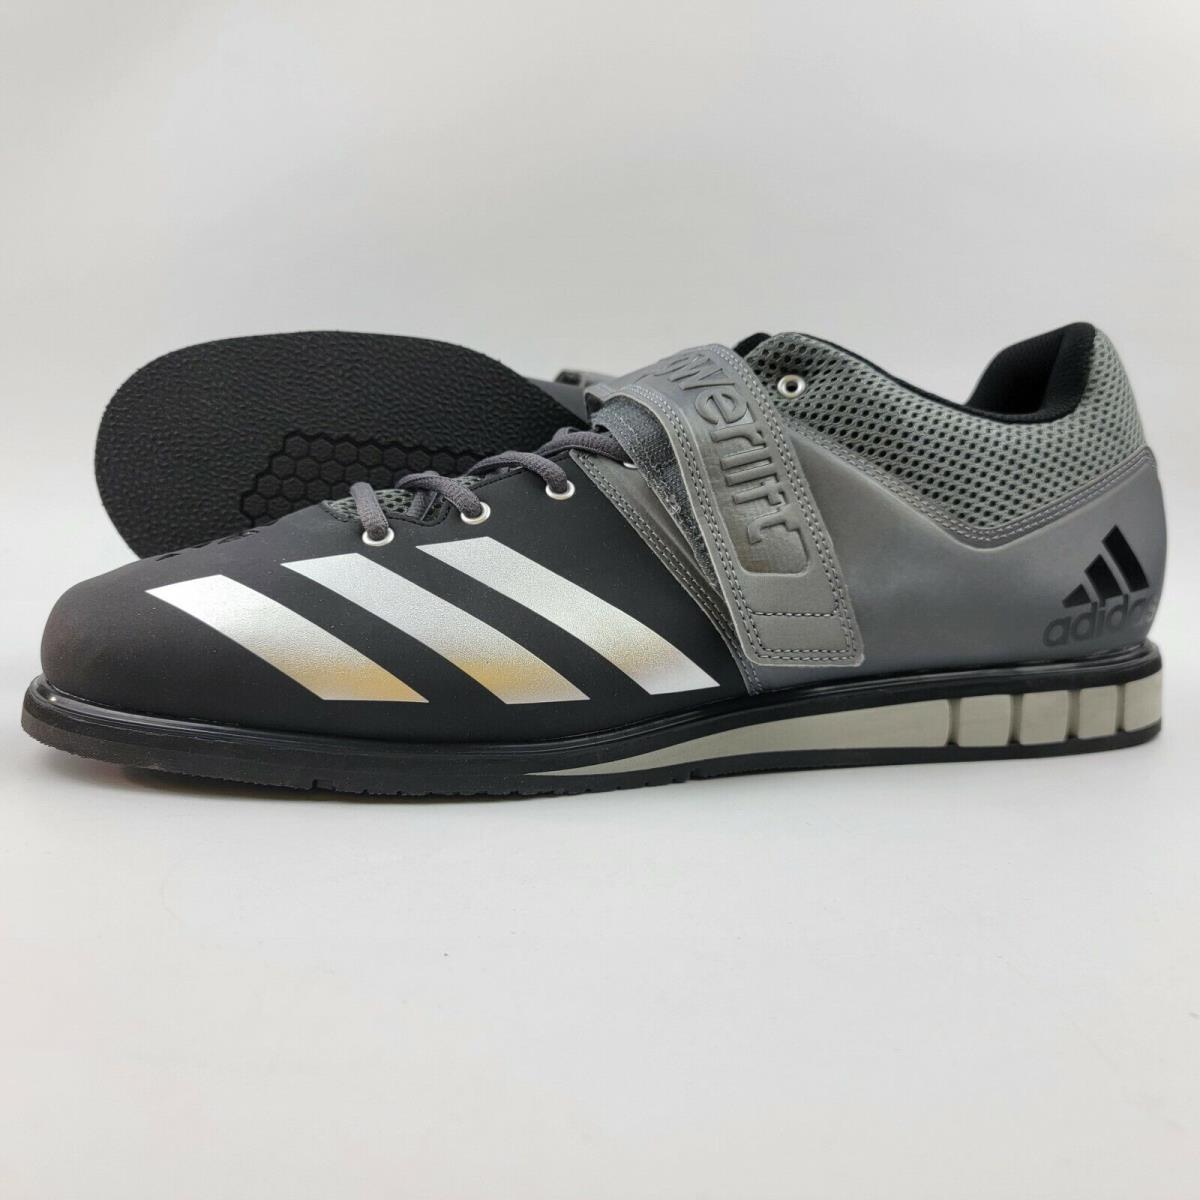 Adidas shoes Powerlift - Black 0